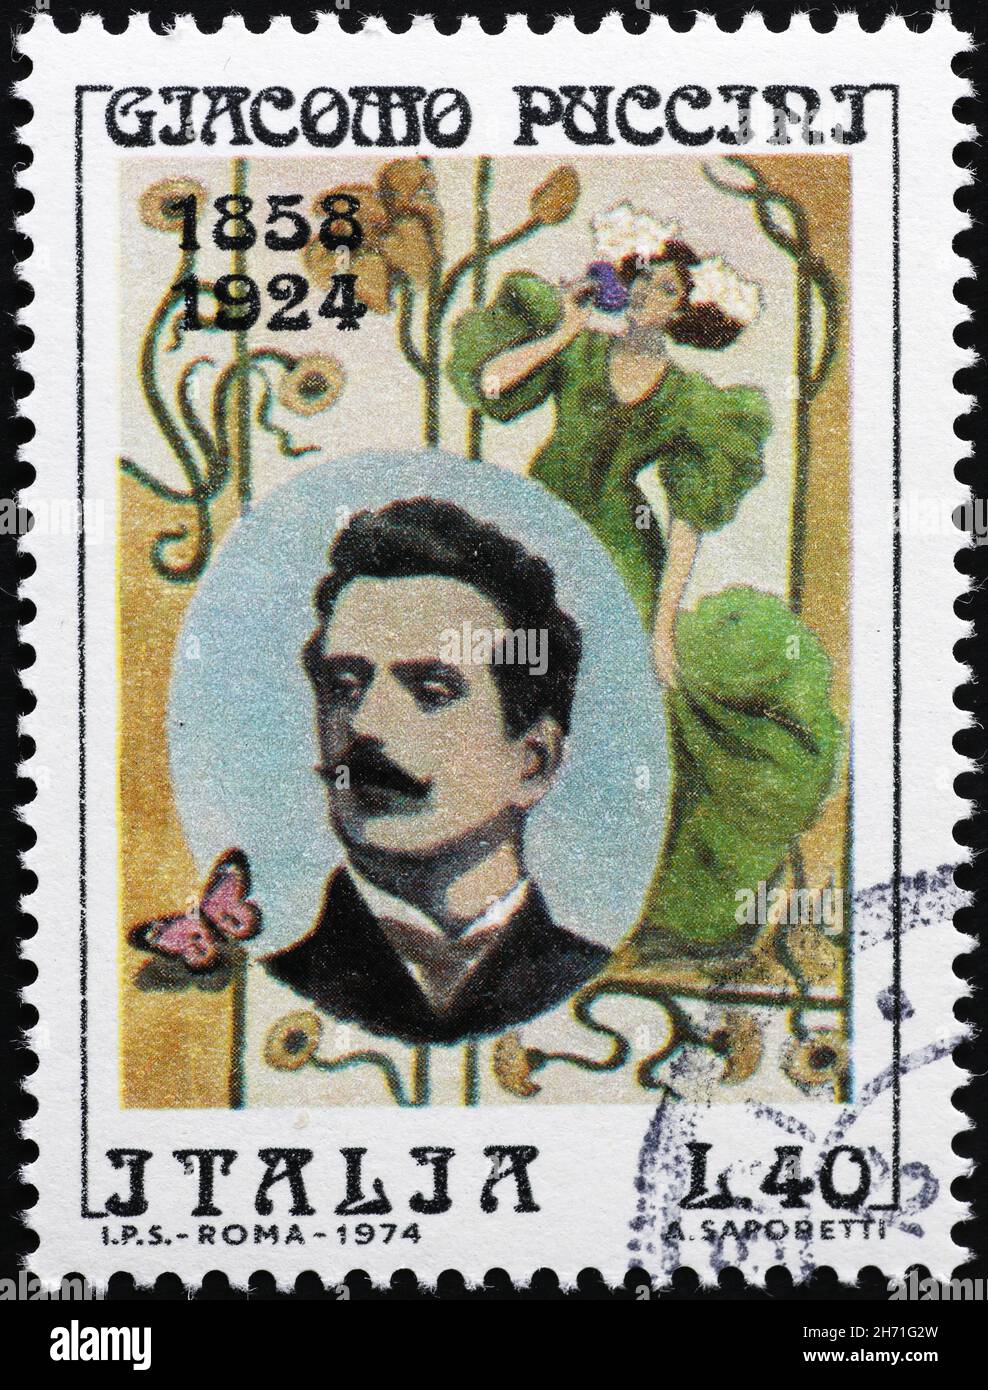 Great italian composer Giacomo Puccini on postage stamp Stock Photo